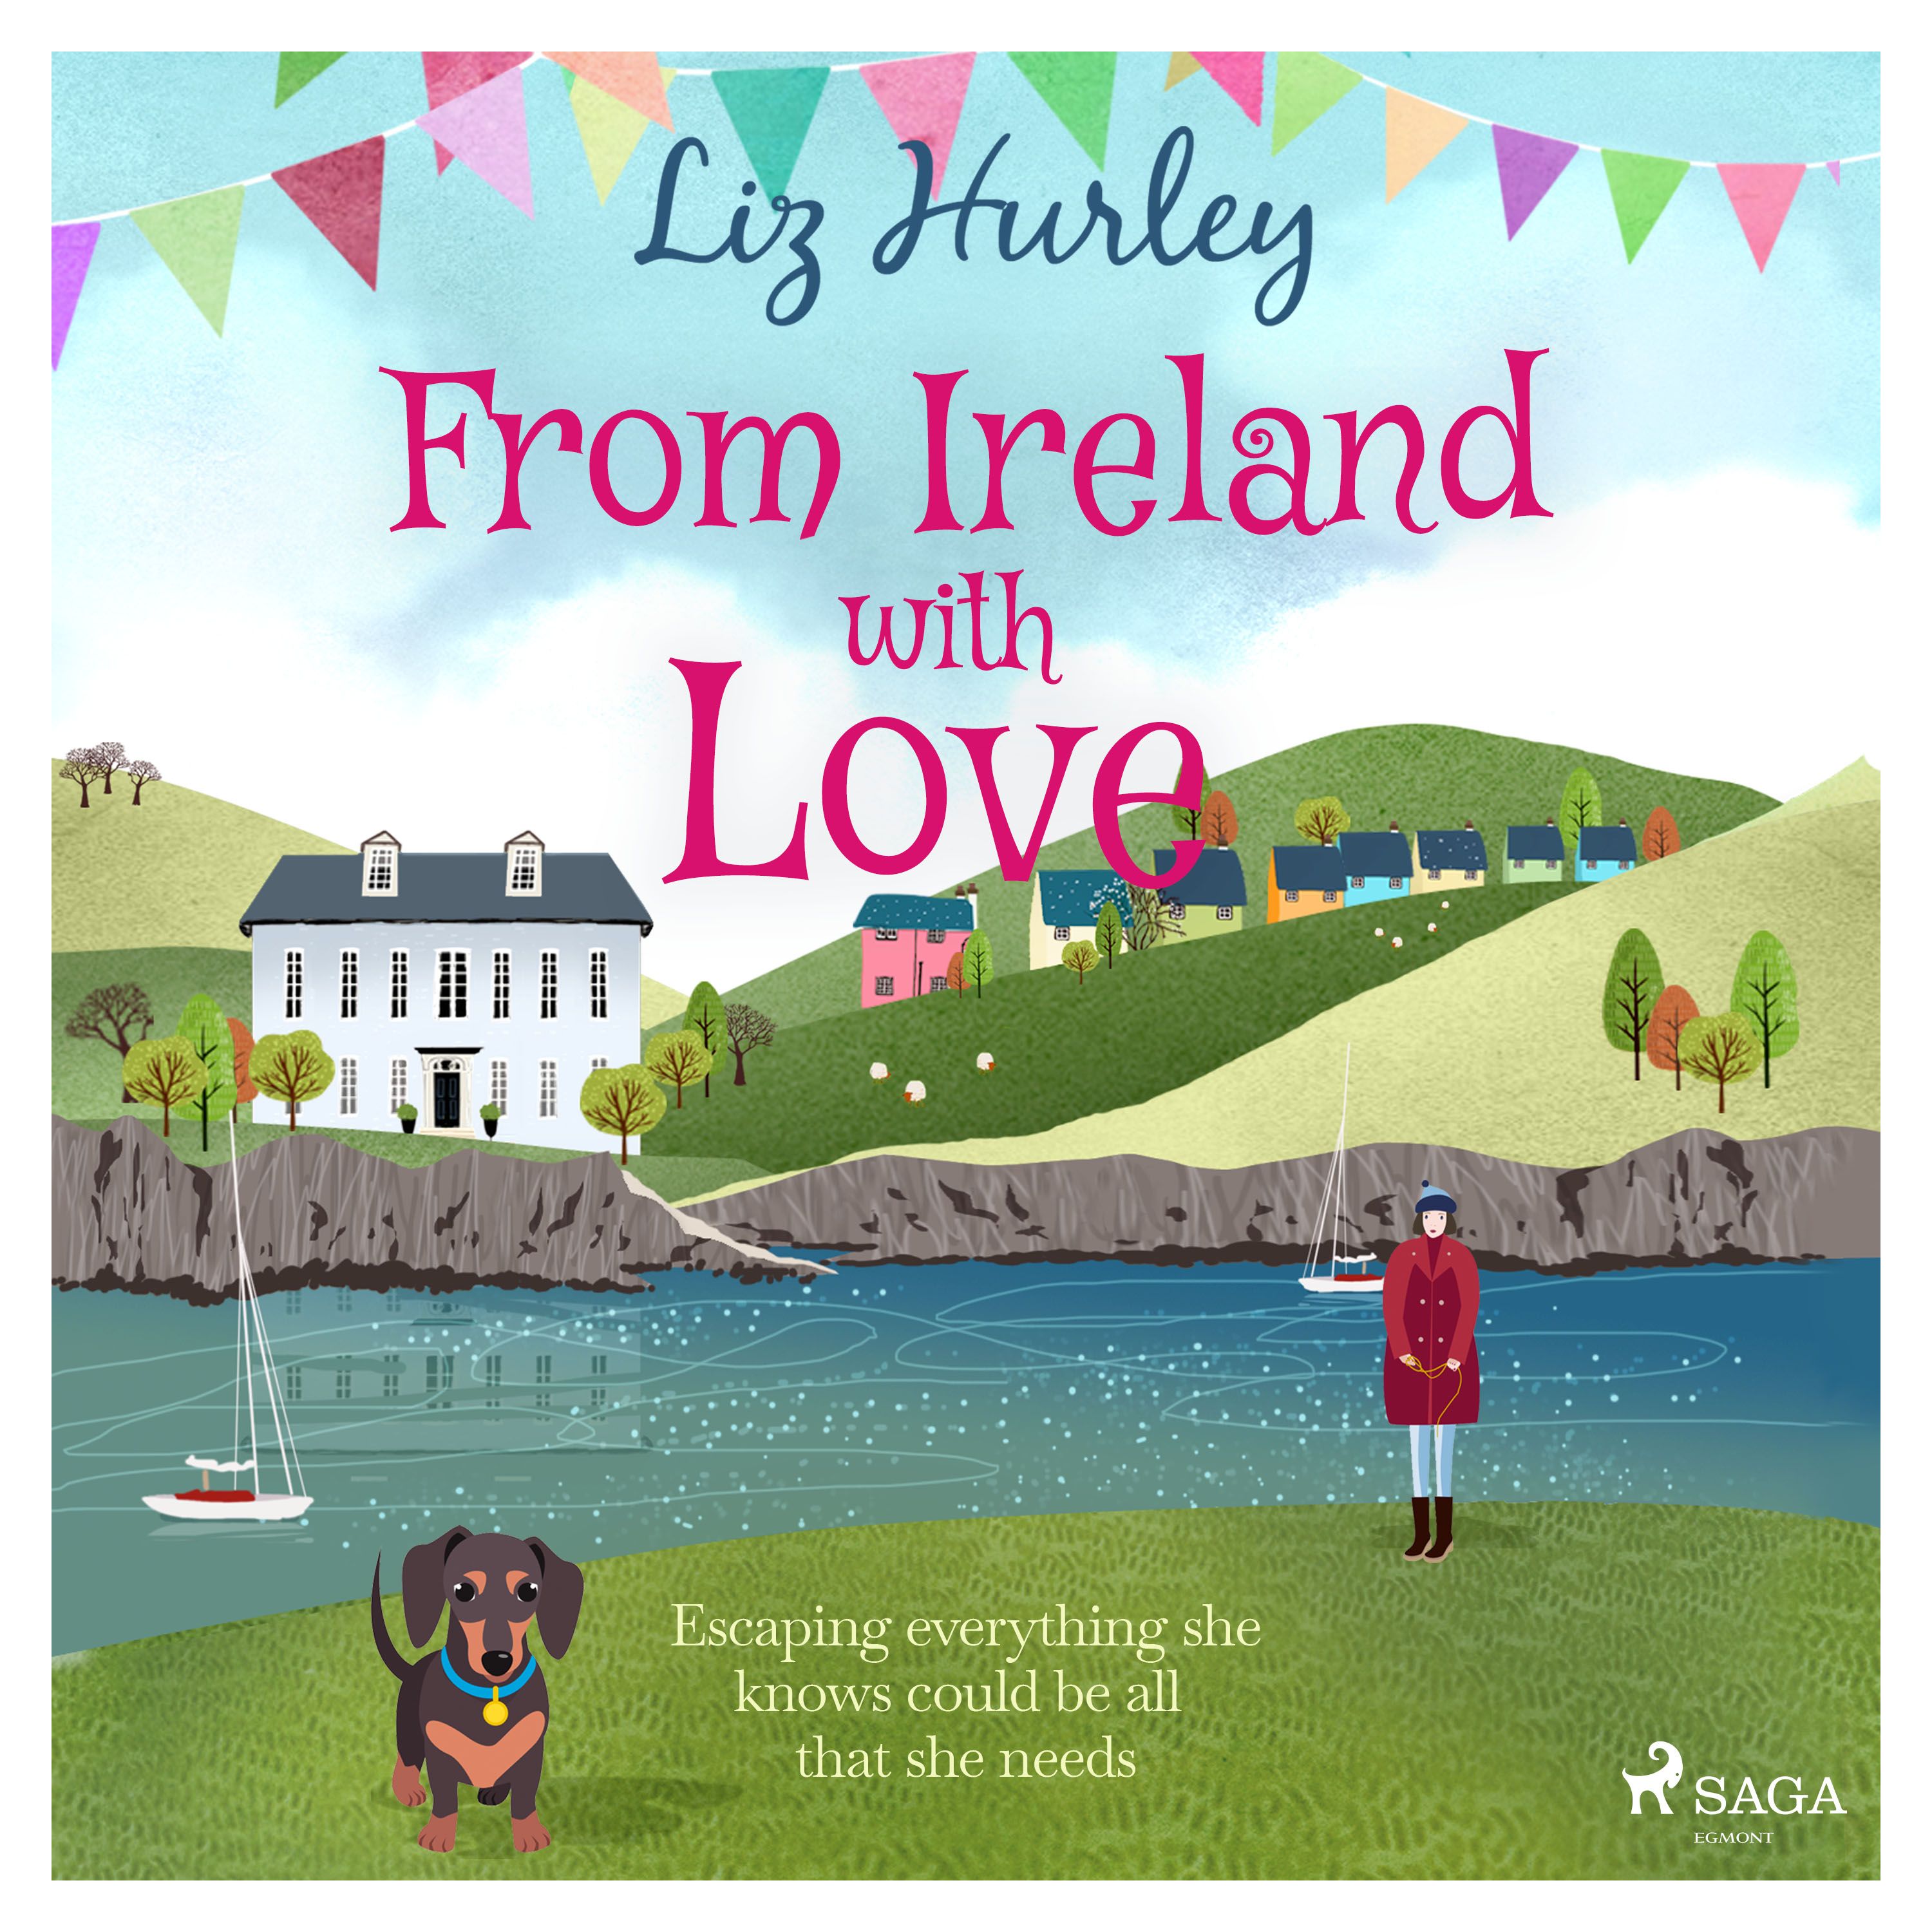 From Ireland With Love, lydbog af Liz Hurley